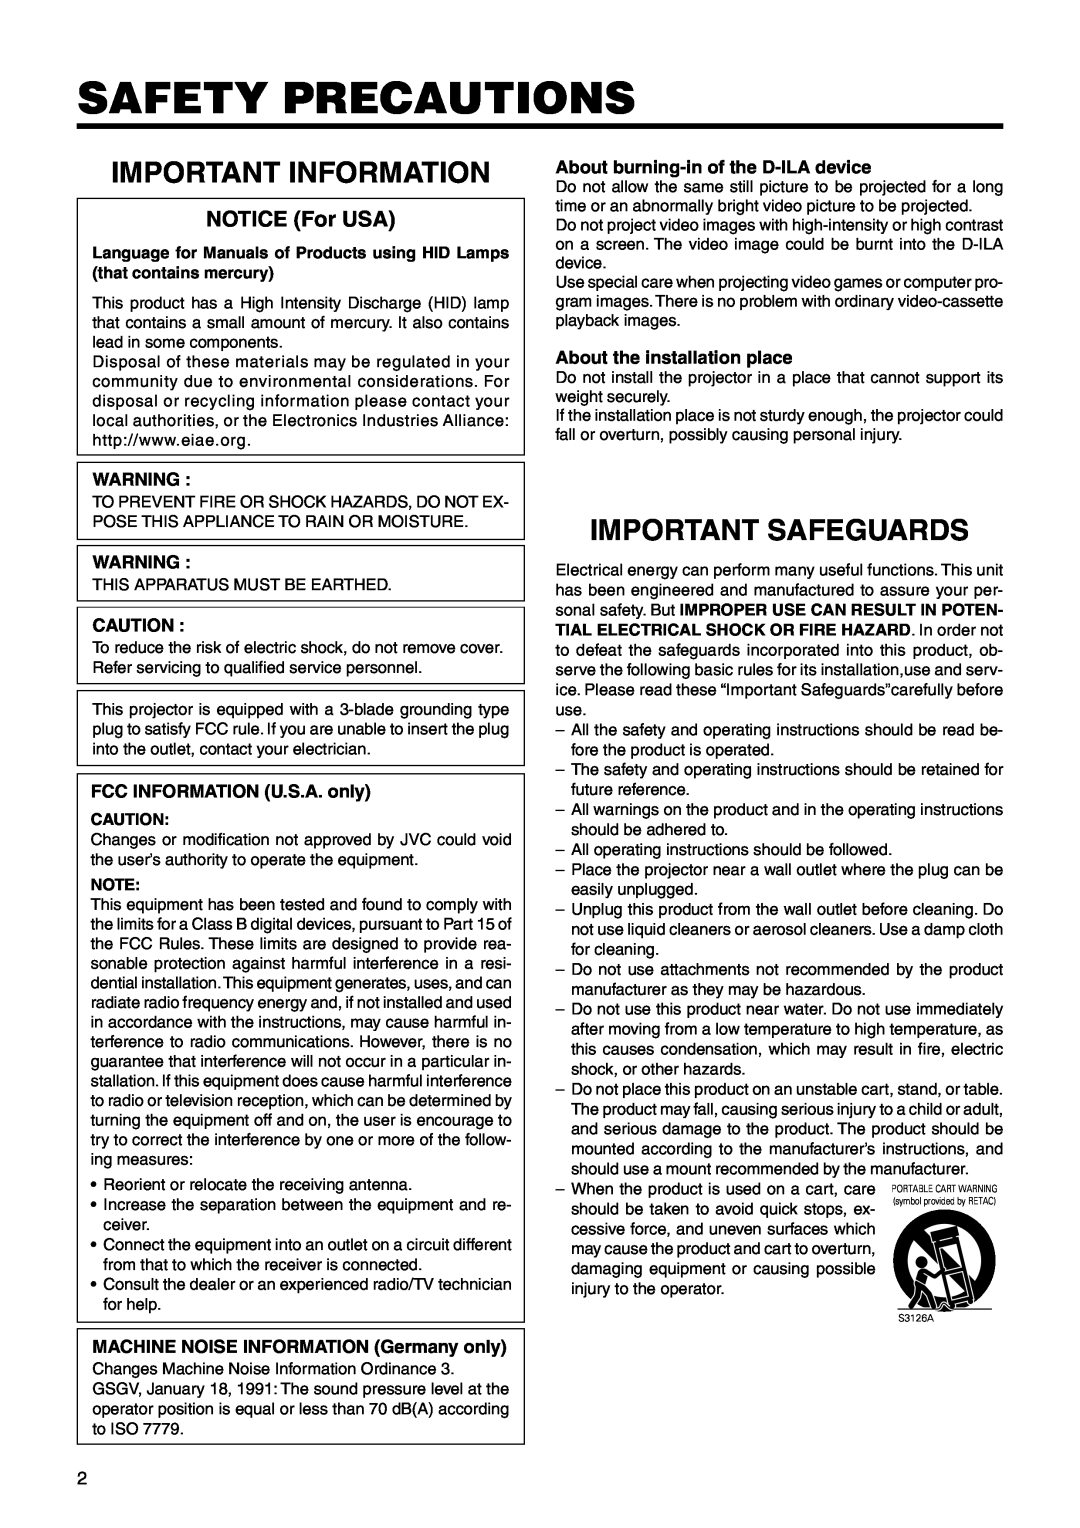 JVC DLA-SX21U manual Safety Precautions, Important Information, NOTICE For USA, FCC INFORMATION U.S.A. only 